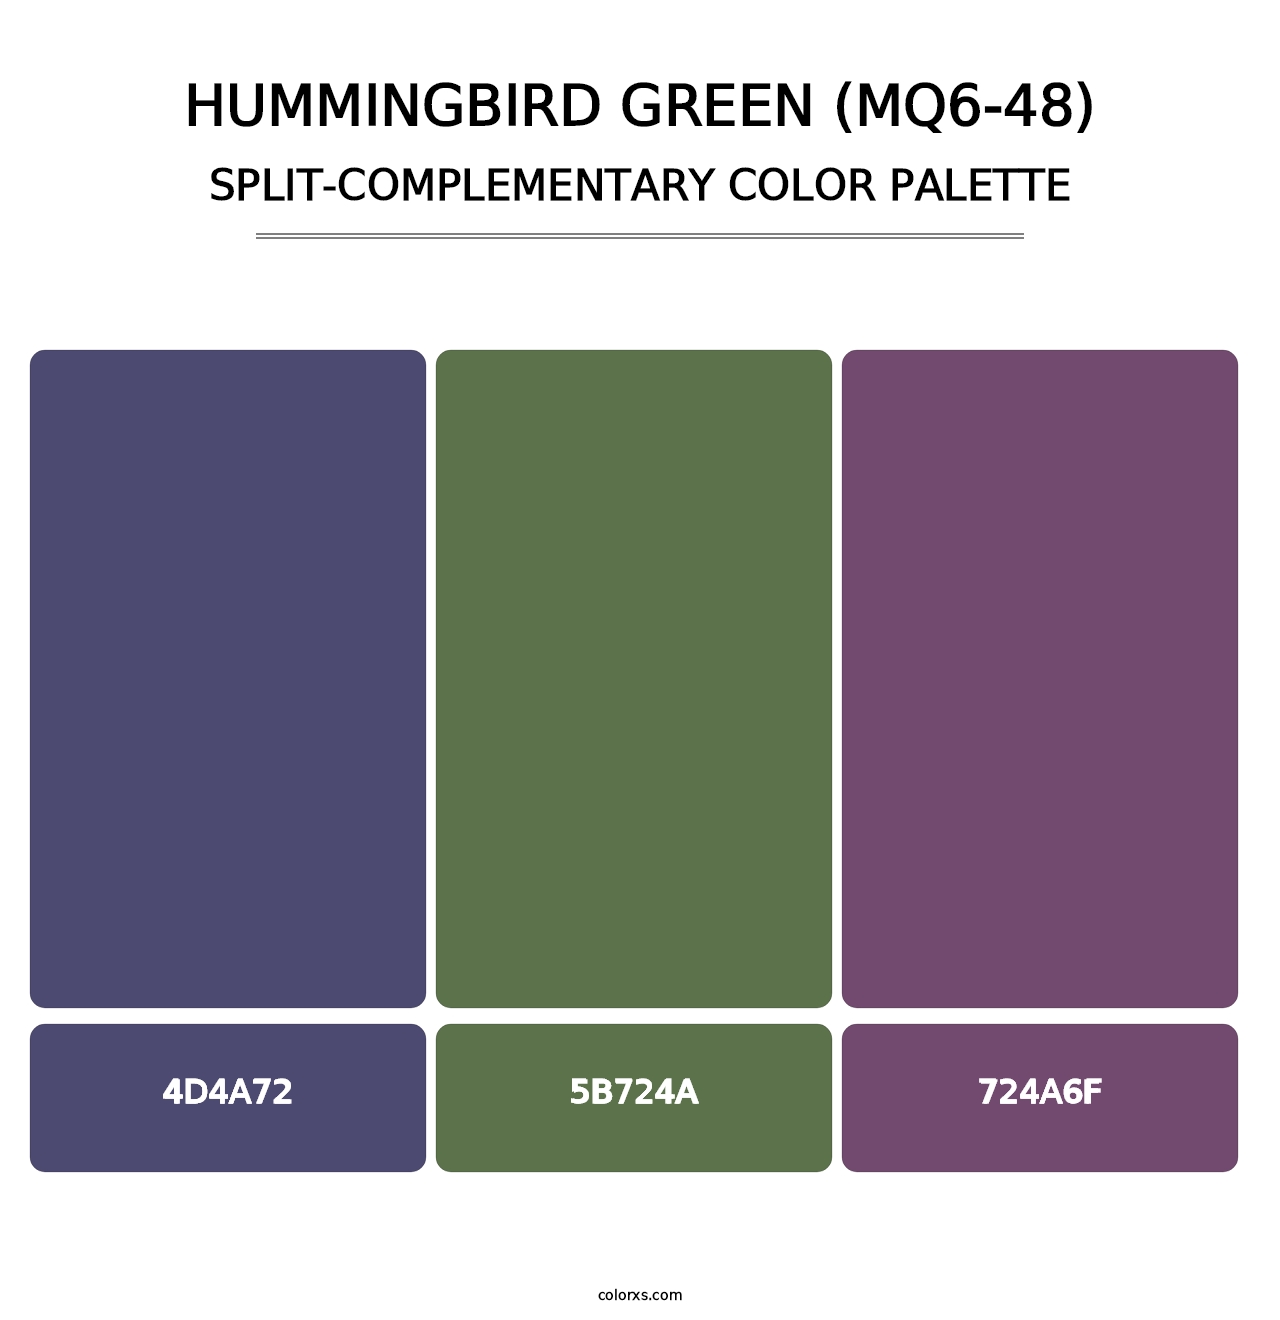 Hummingbird Green (MQ6-48) - Split-Complementary Color Palette